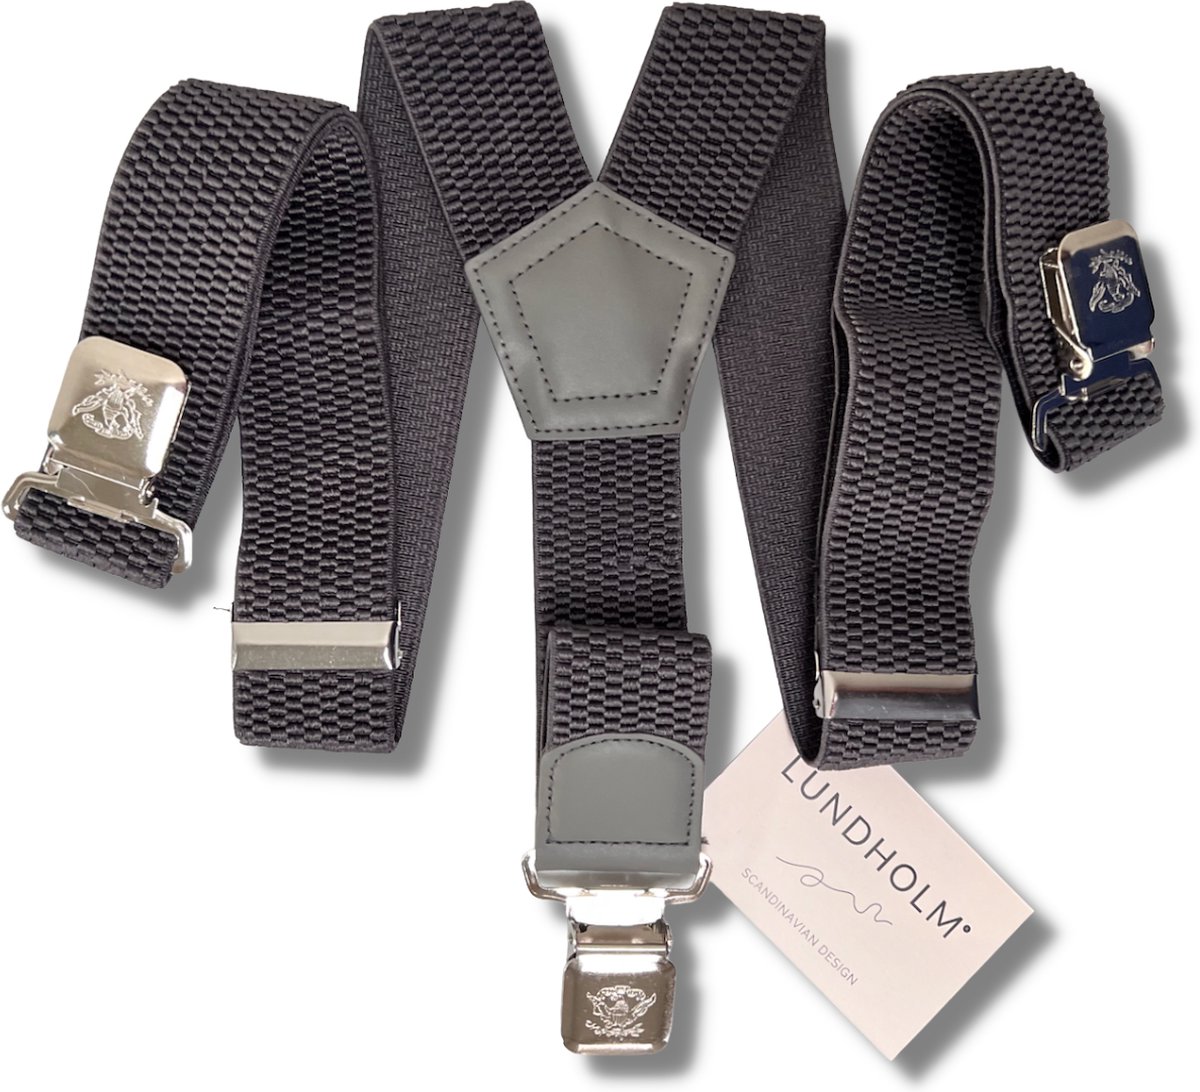 Lundholm Bretels heren volwassenen grijs donkergrijs grey 3 clips - extra stevig hoge kwaliteit - Scandinavisch design - mannen cadeautjes tip | Lundholm Bastad serie